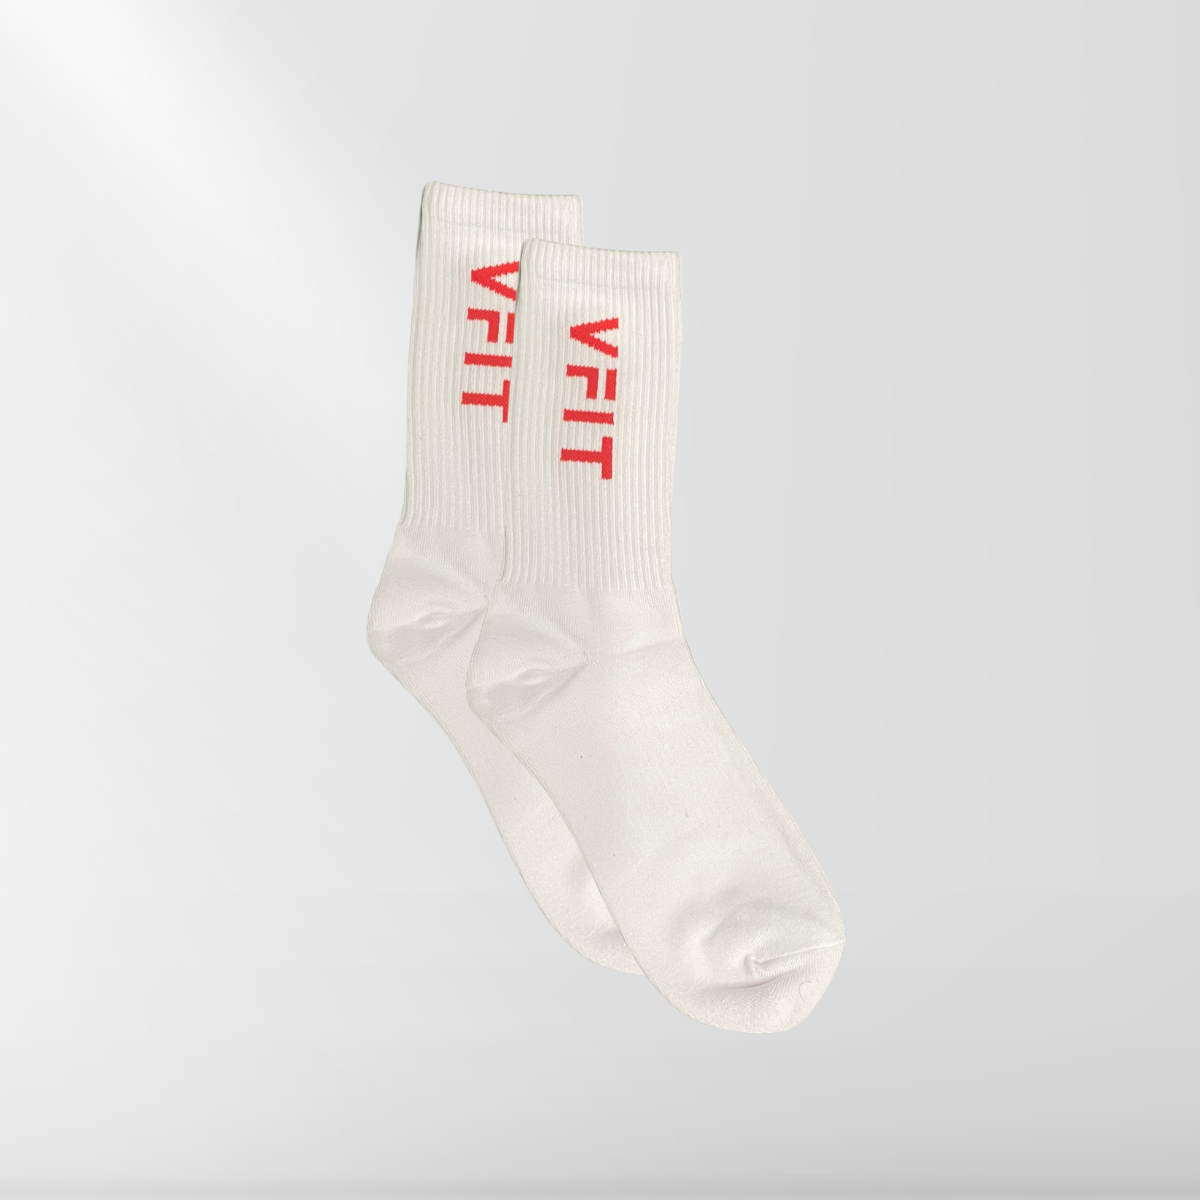 VFIT Socks White